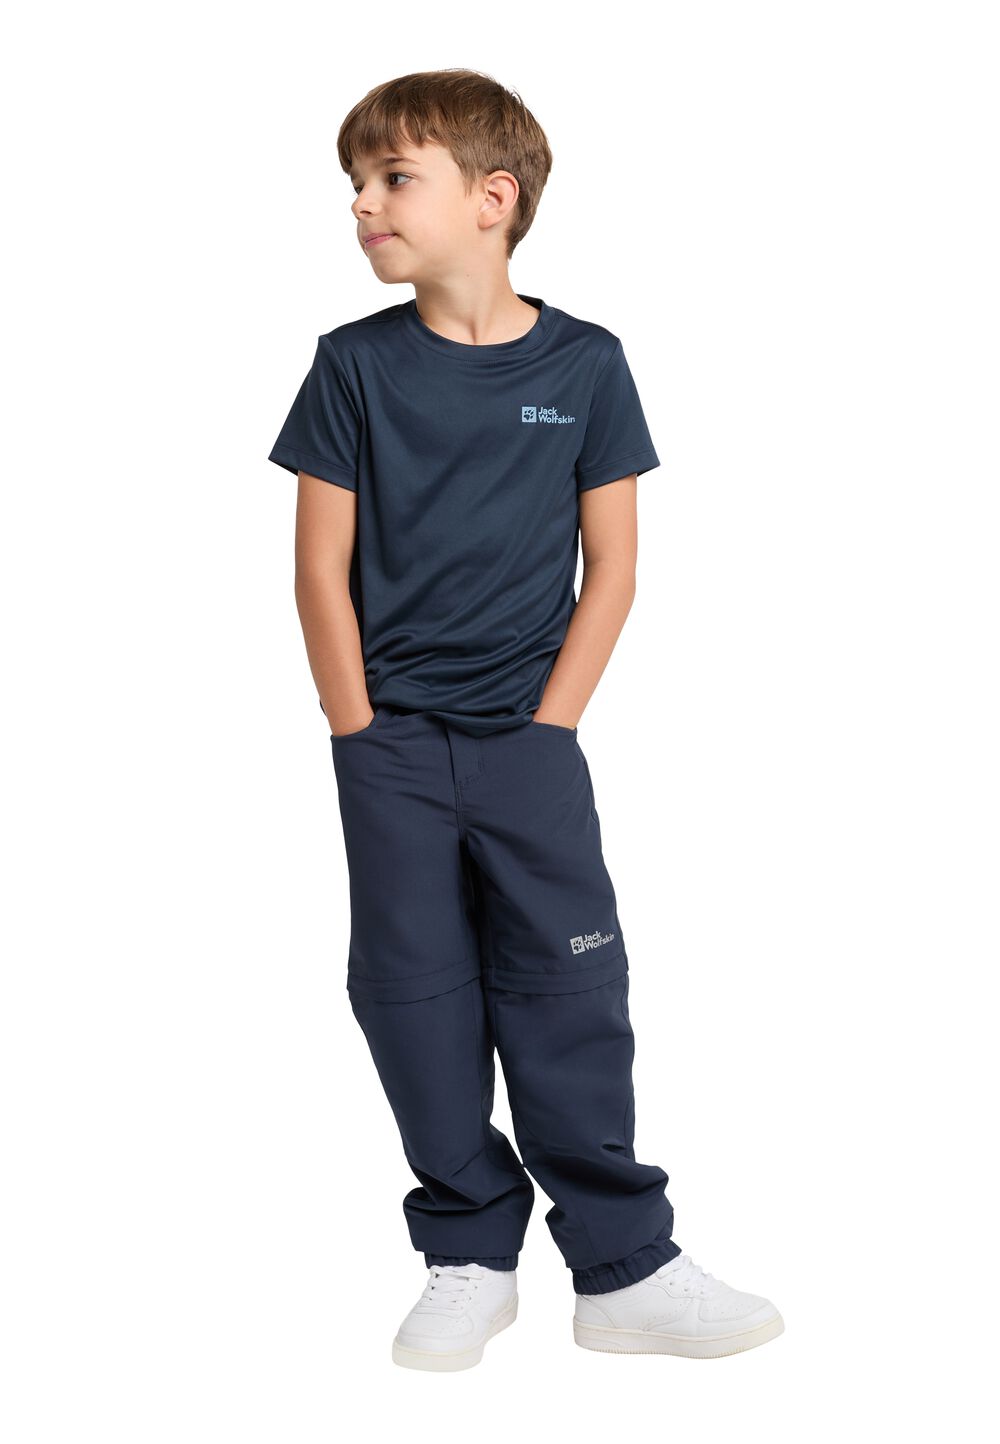 Jack Wolfskin Active Solid T-Shirt Kids Functioneel shirt Kinderen 152 blue night blue